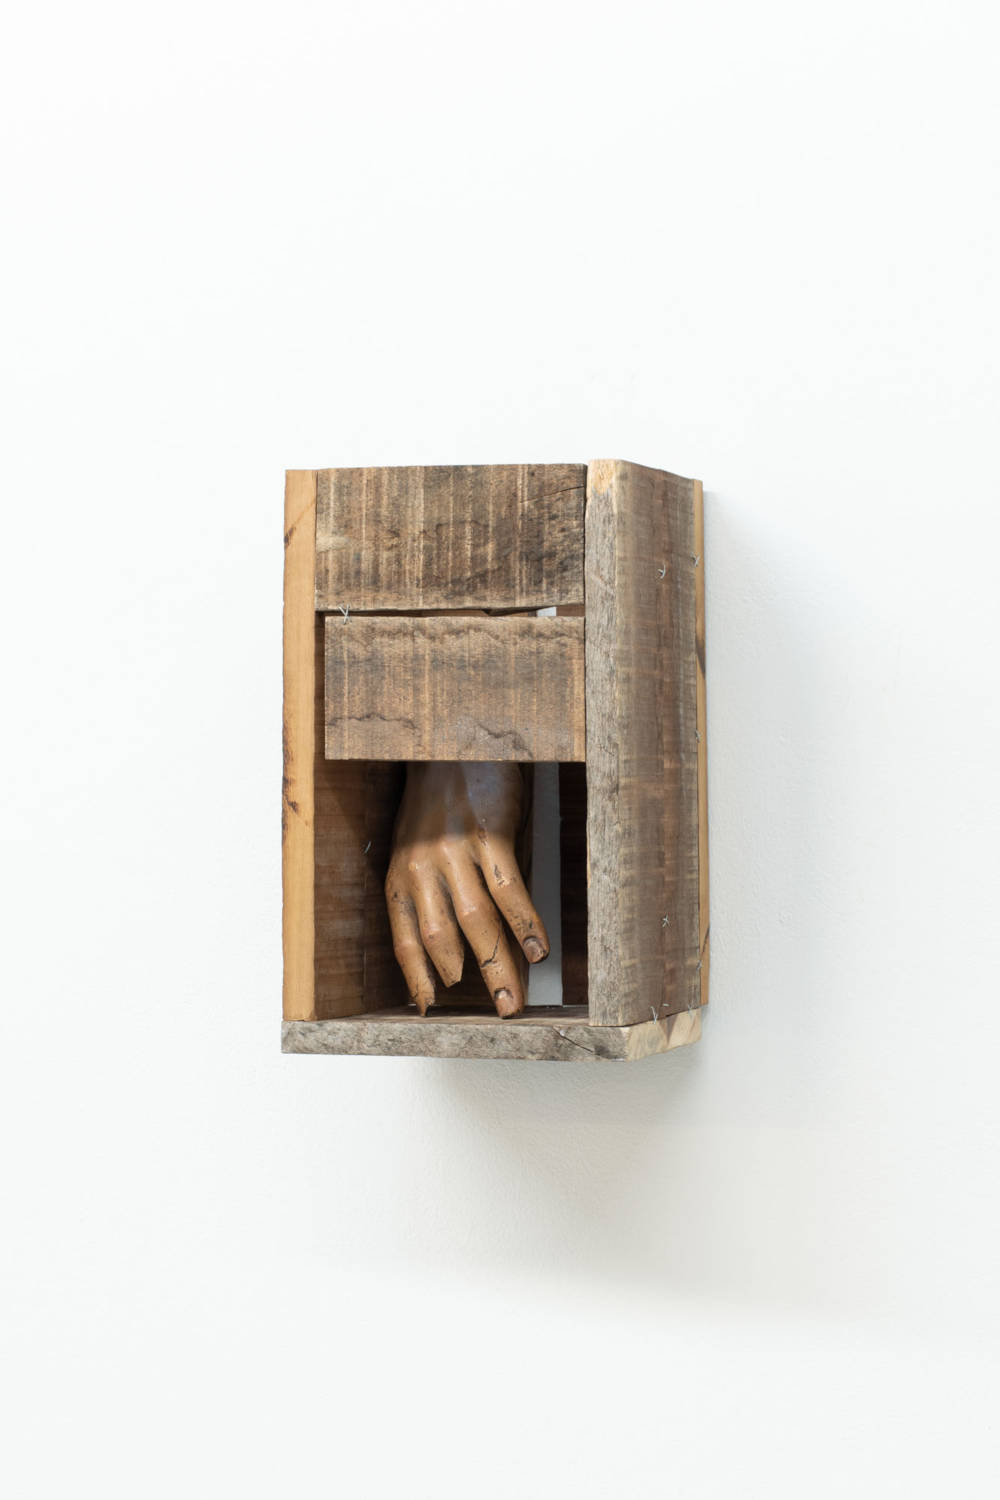 Jacobo Castellano, Sin título (caja mano), 2019